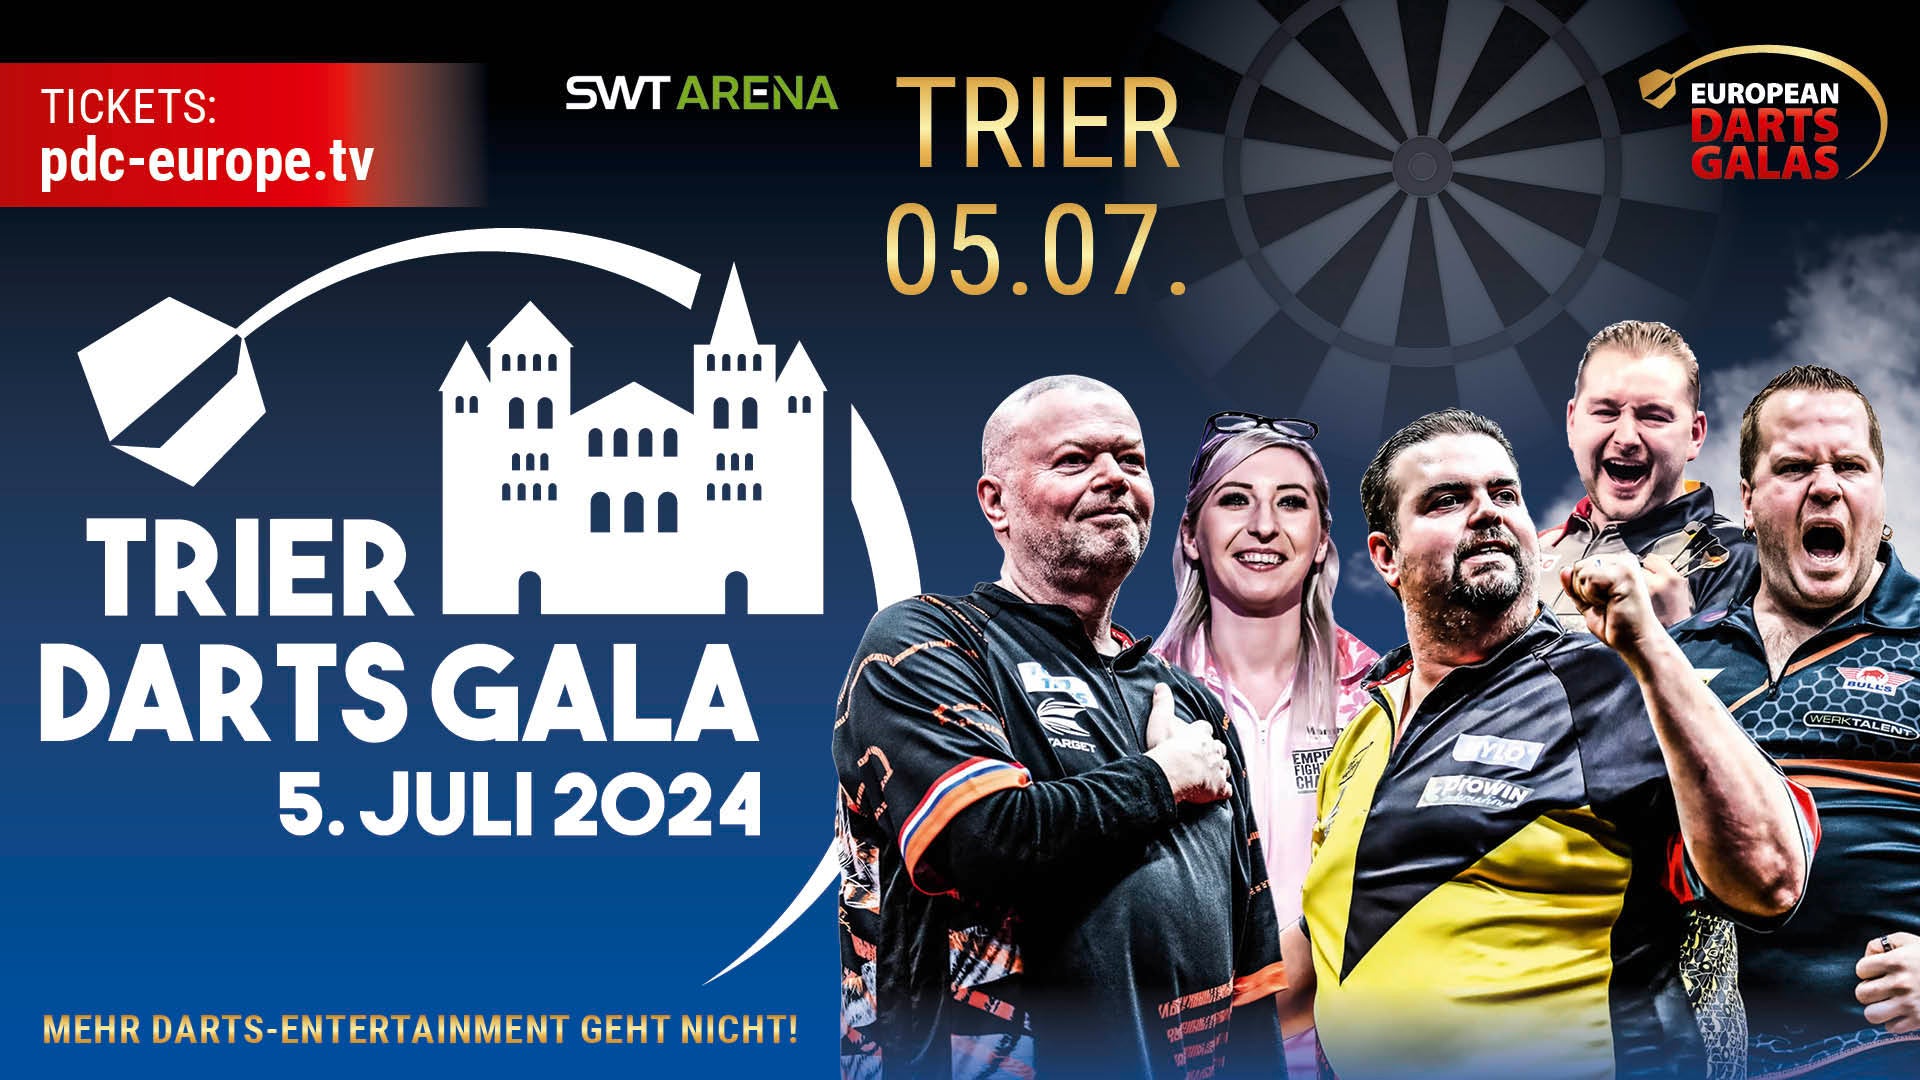 Trier Darts Gala 2024 - Premium Seats